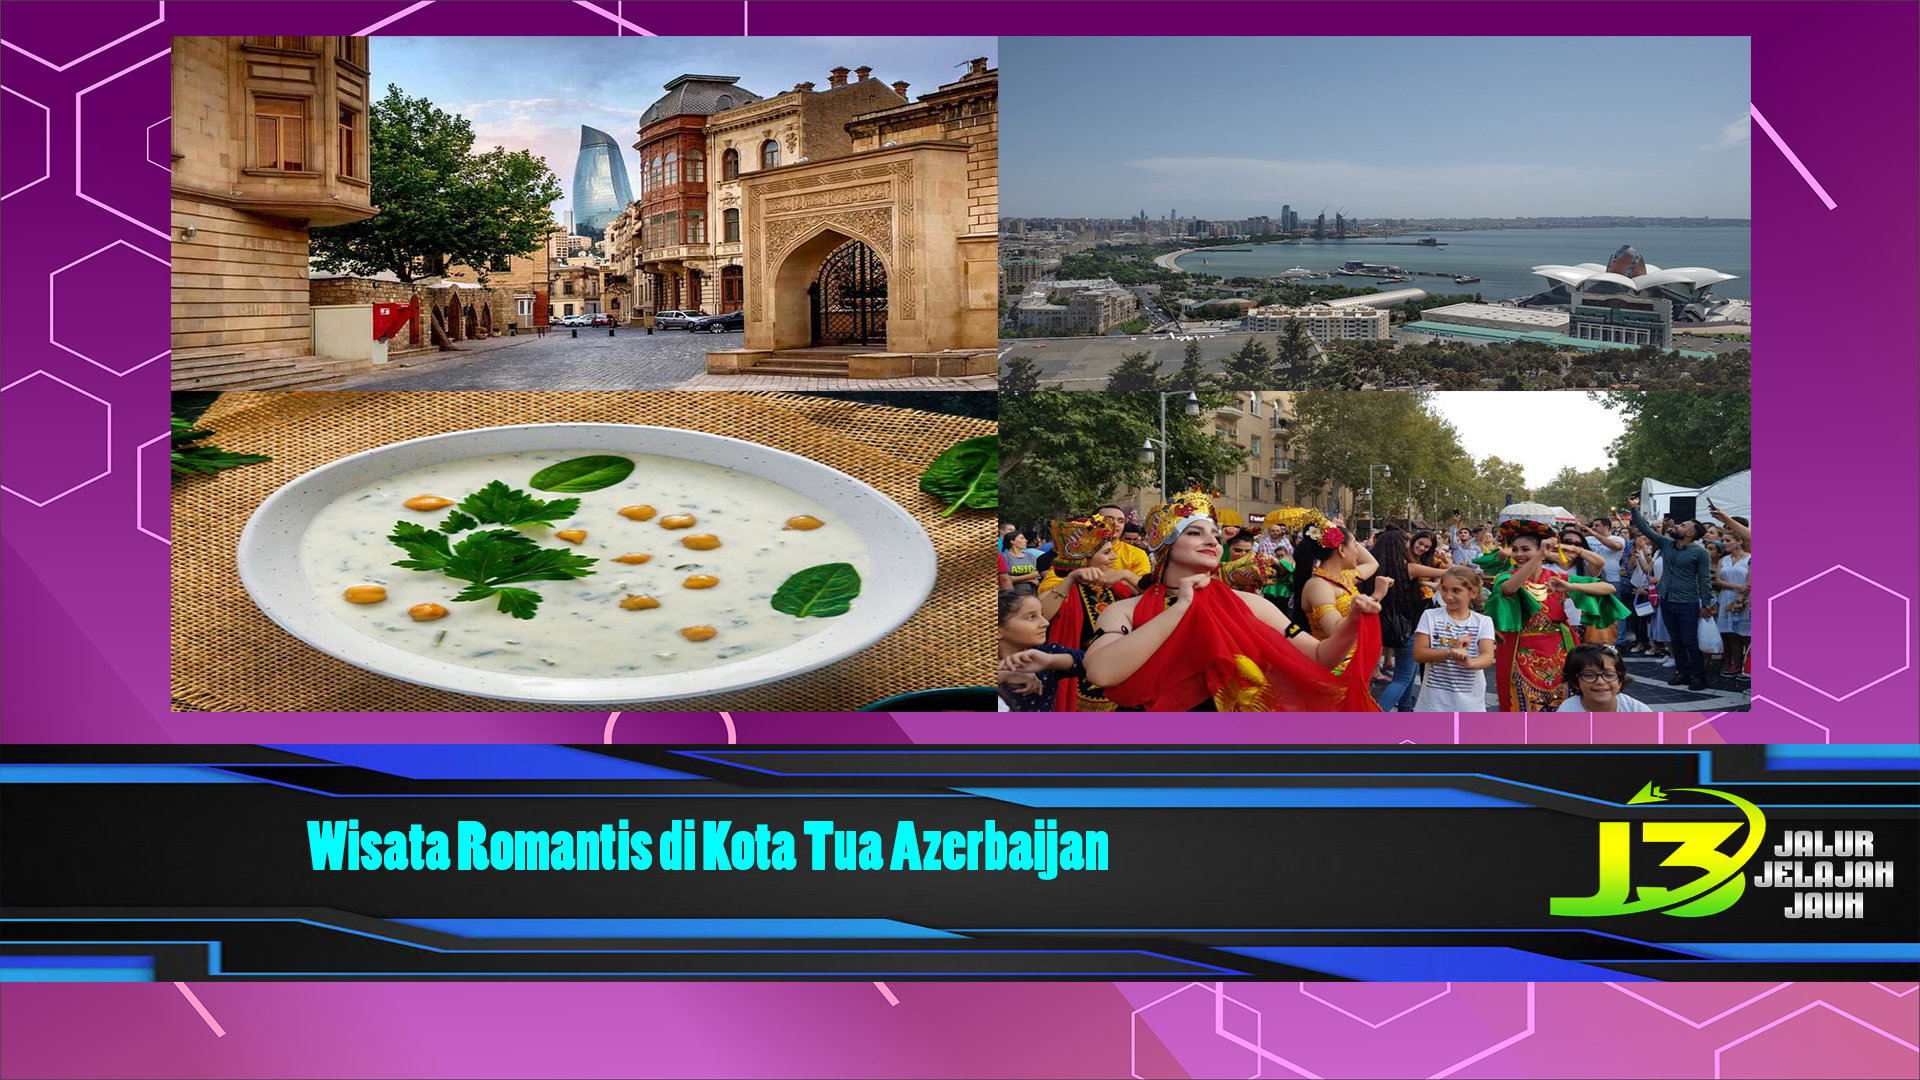 Wisata Romantis di Kota Tua Azerbaijan